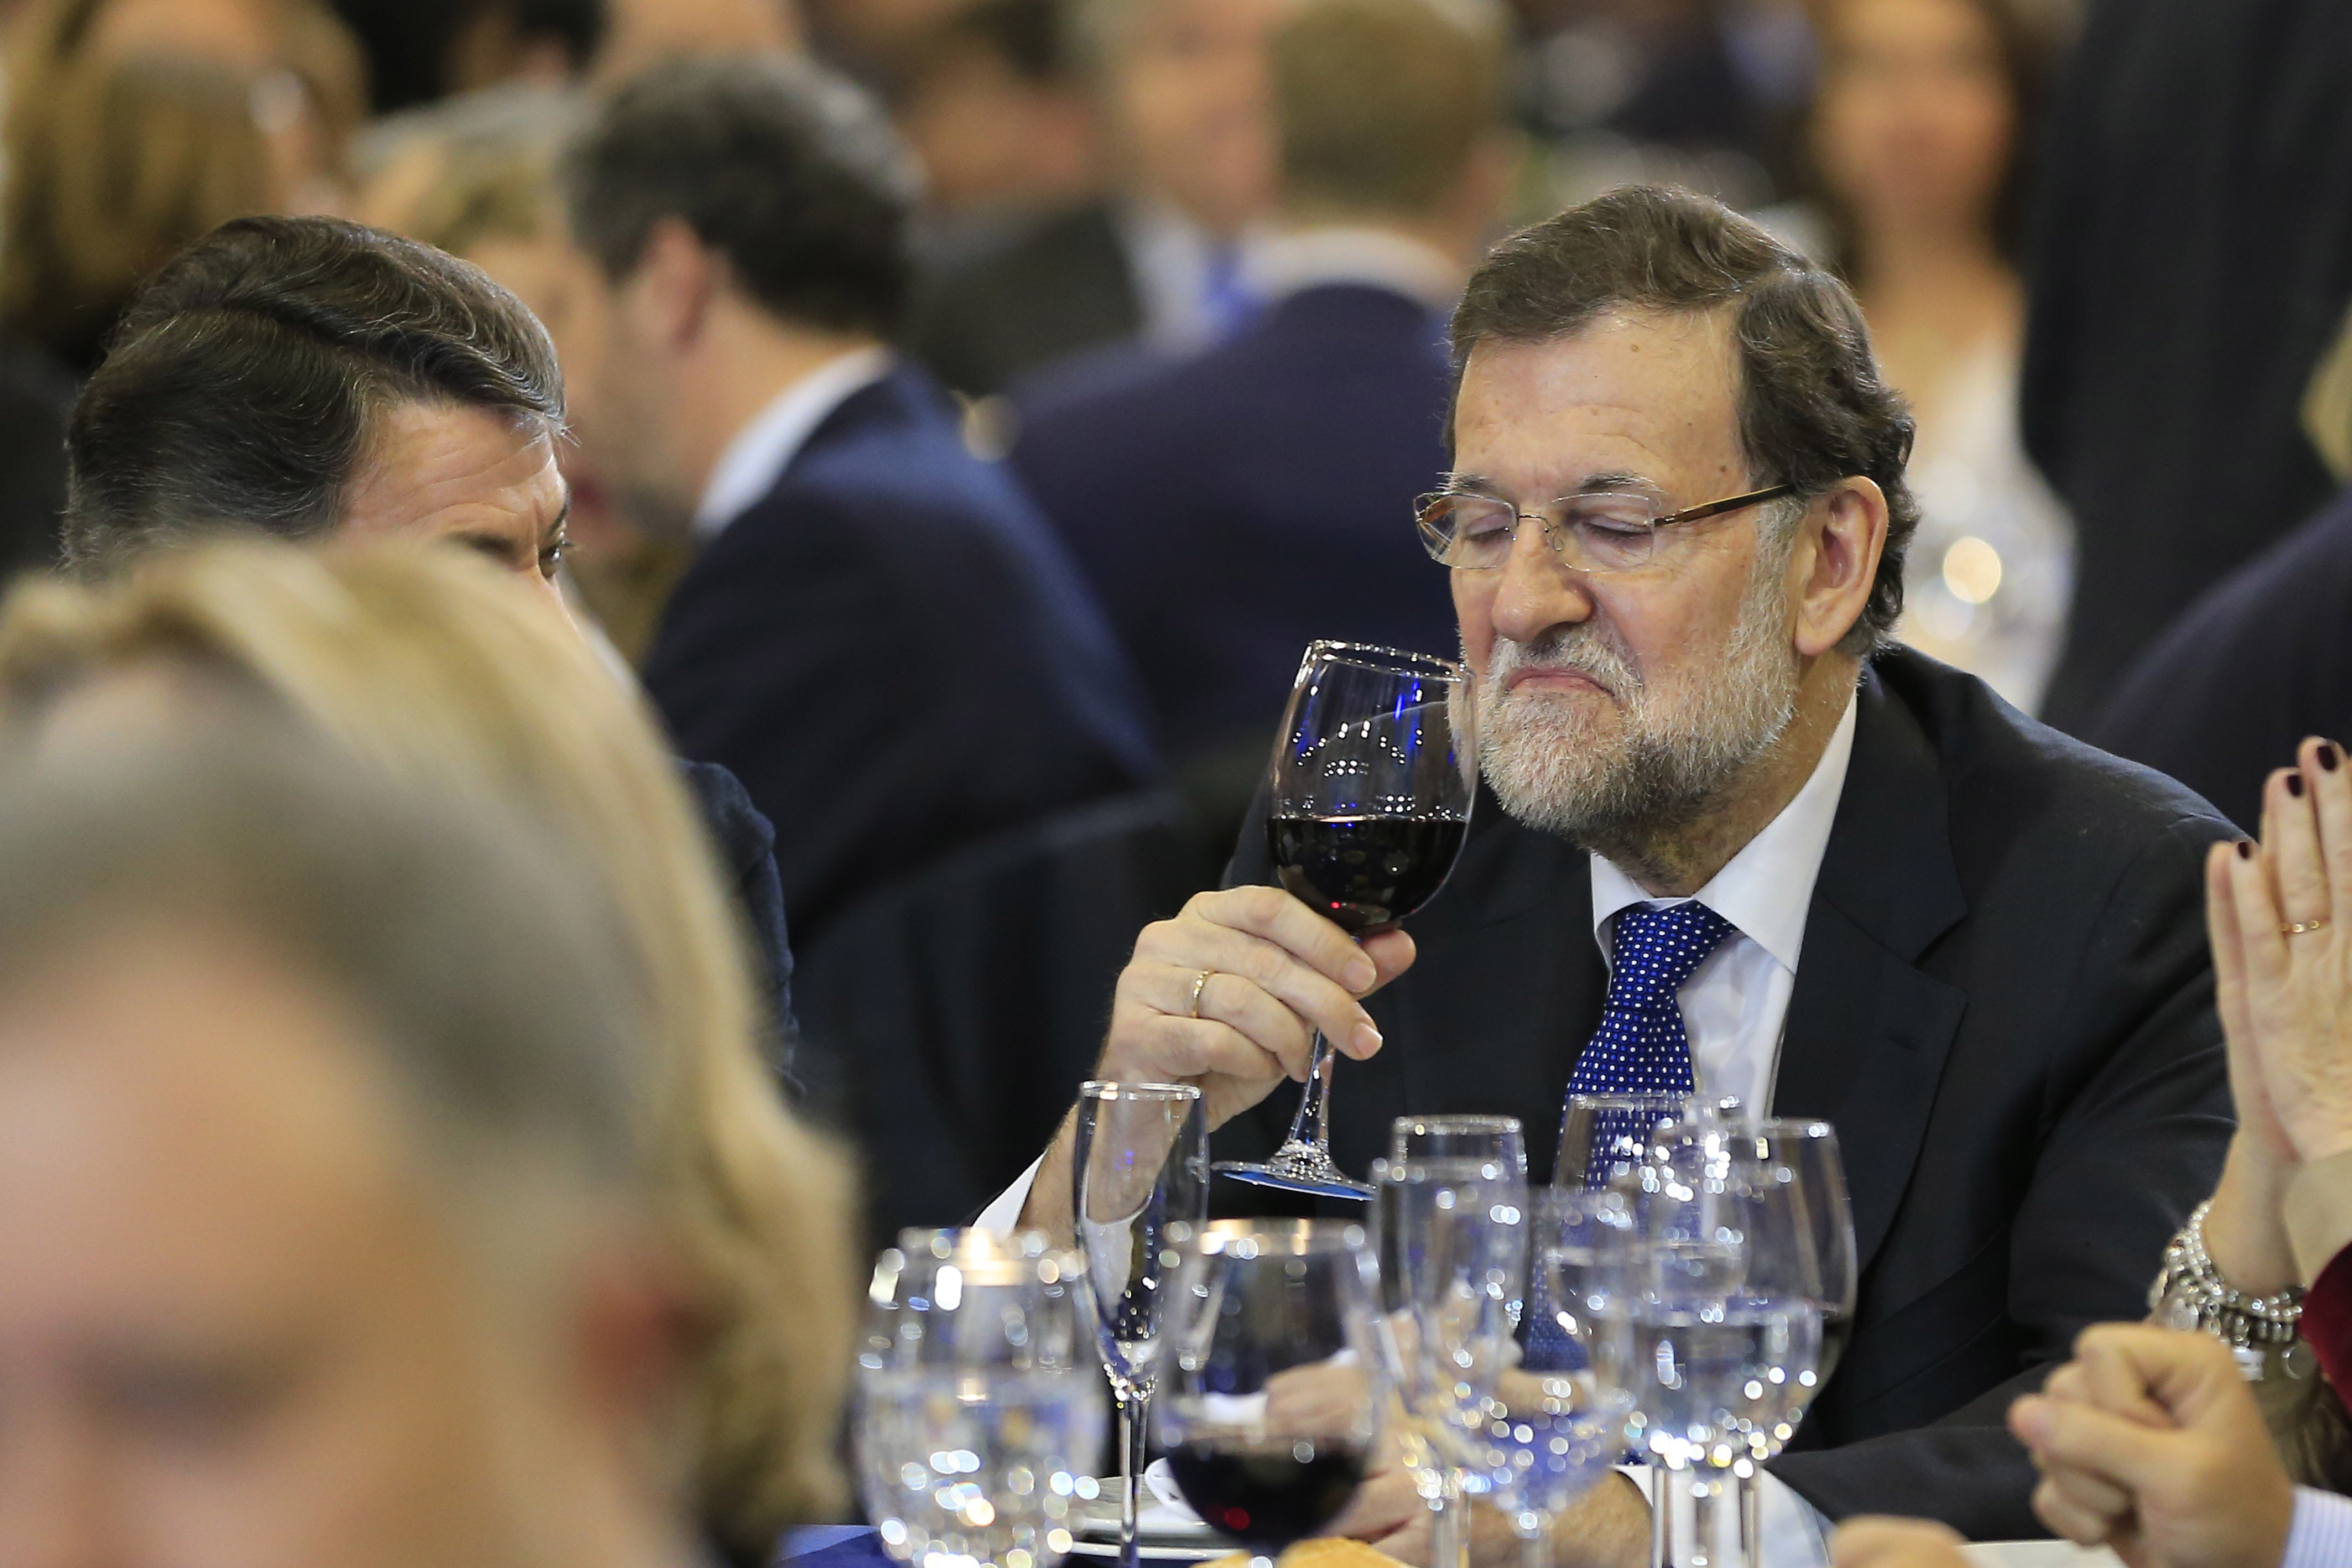 TVE humilia Rajoy en un programa infantil: "discursos disparatados"